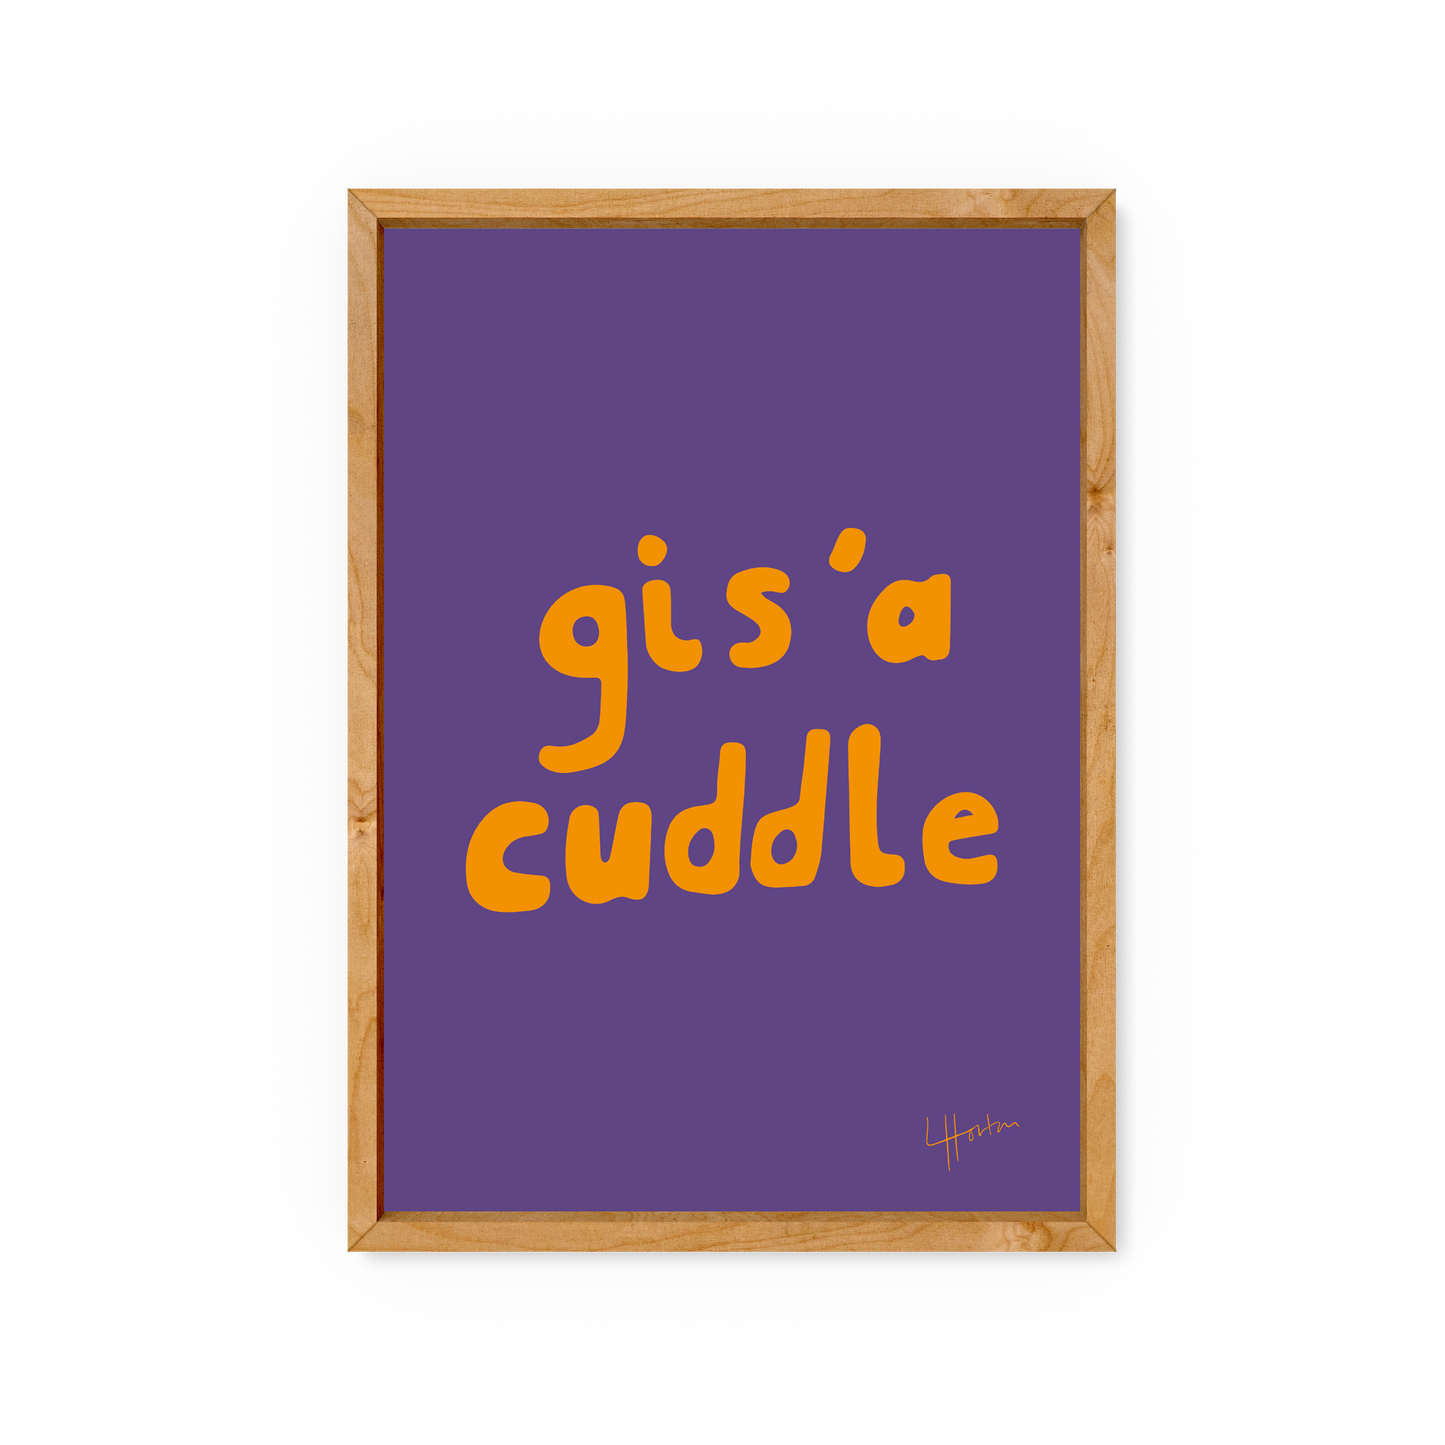 Gis'a Cuddle - Yorkshire Slang Art Print - Luke Horton